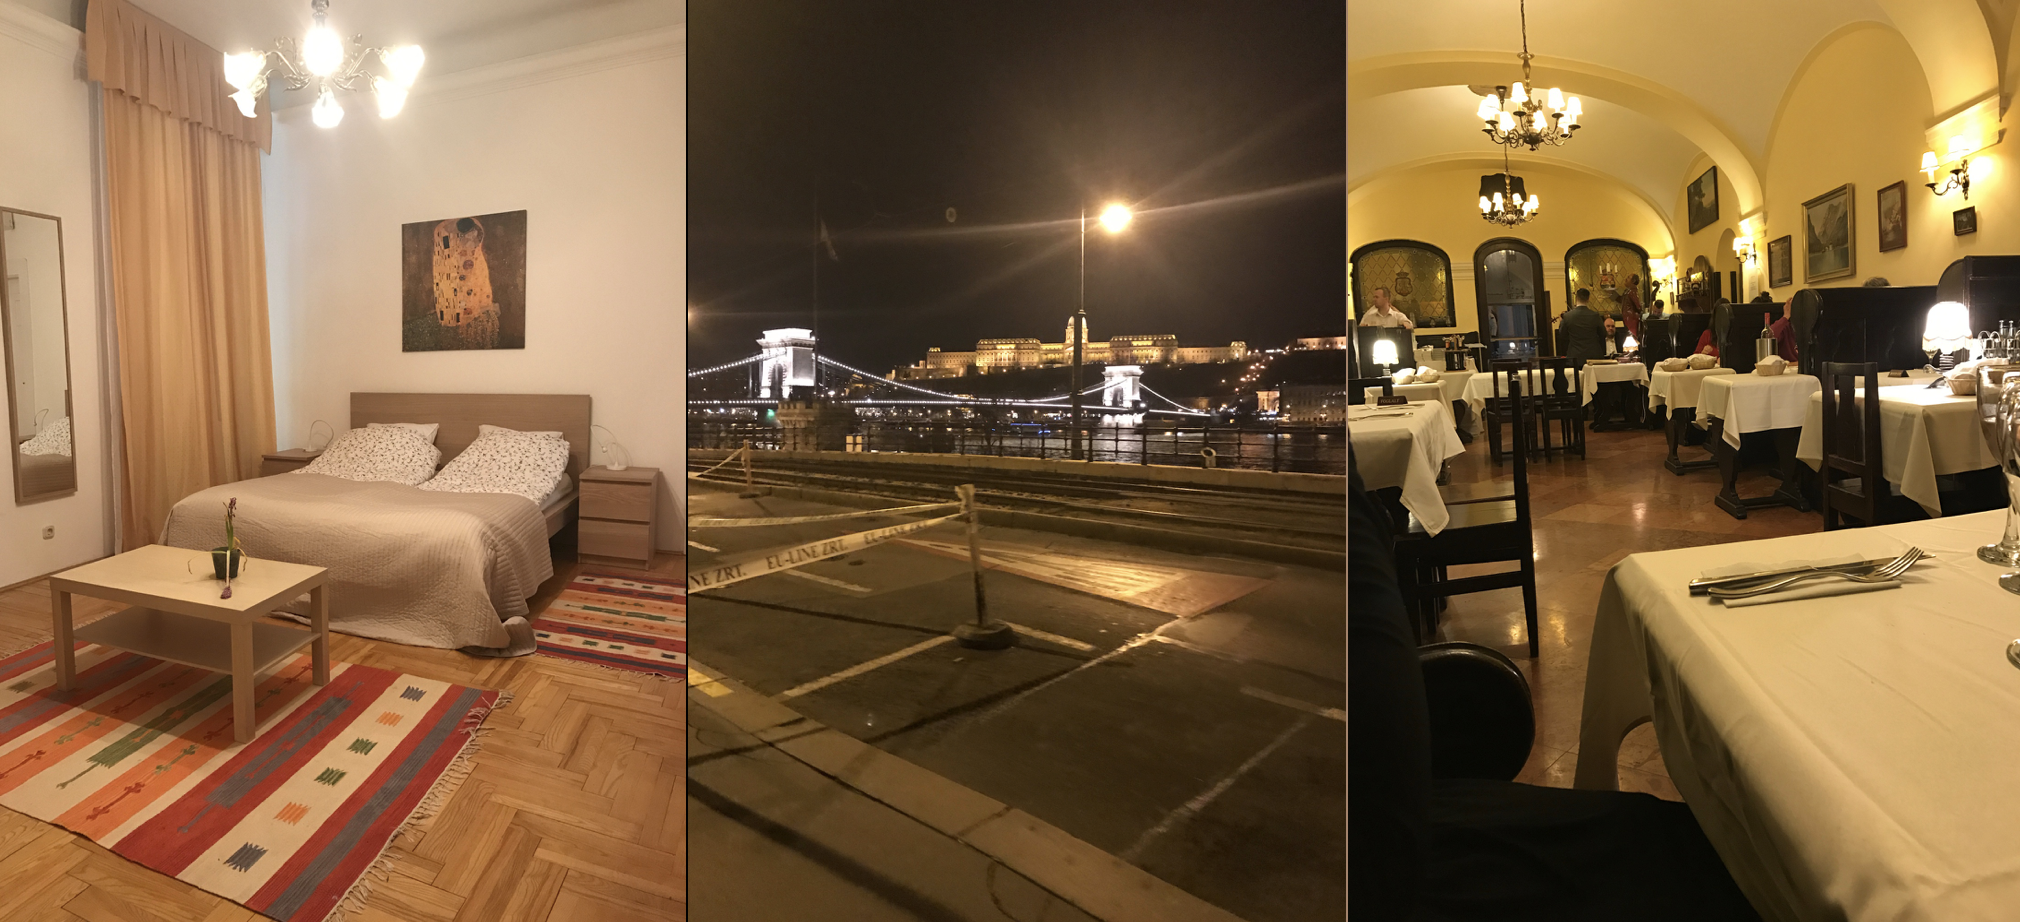 Budapest donau floden restaurant airbnb lejlighed